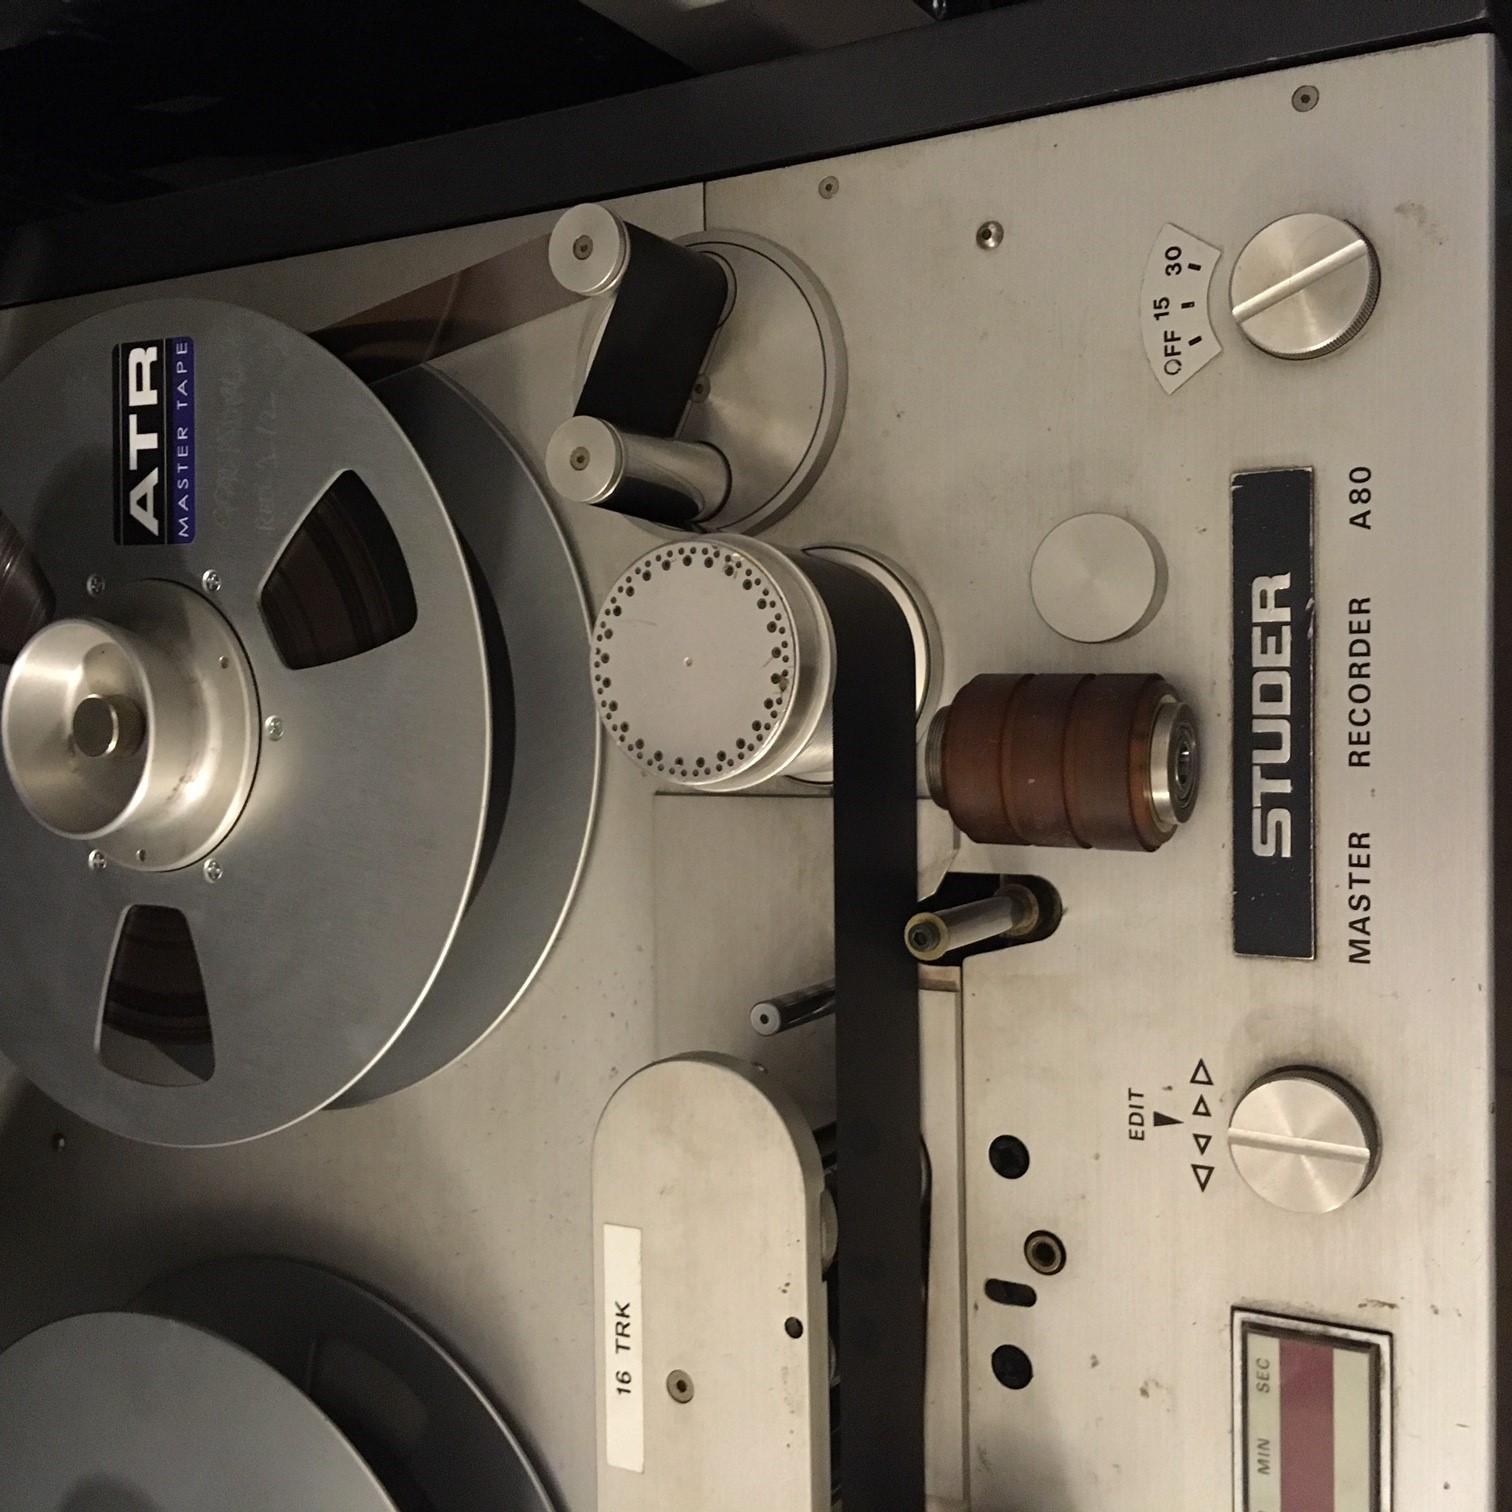 Analogue tape recording machine gets bearing upgrade